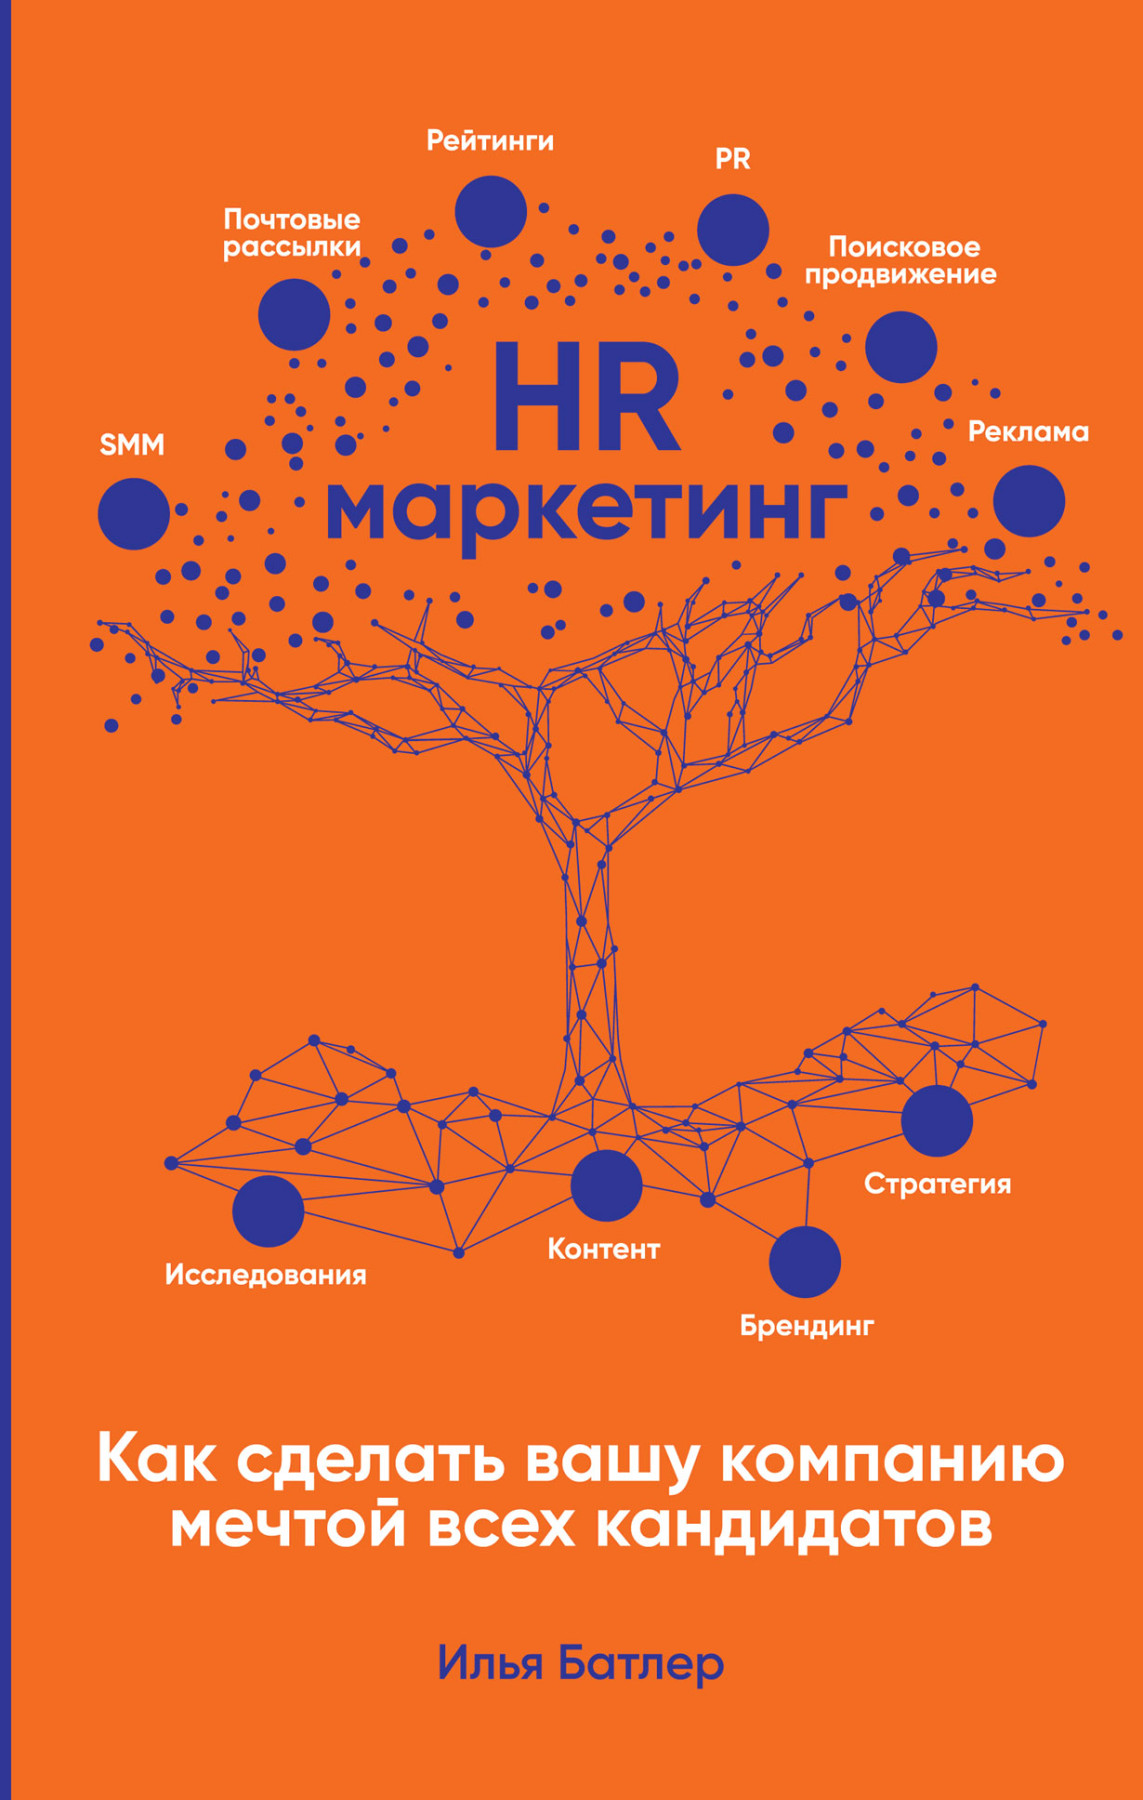 HR-маркетинг обложка.